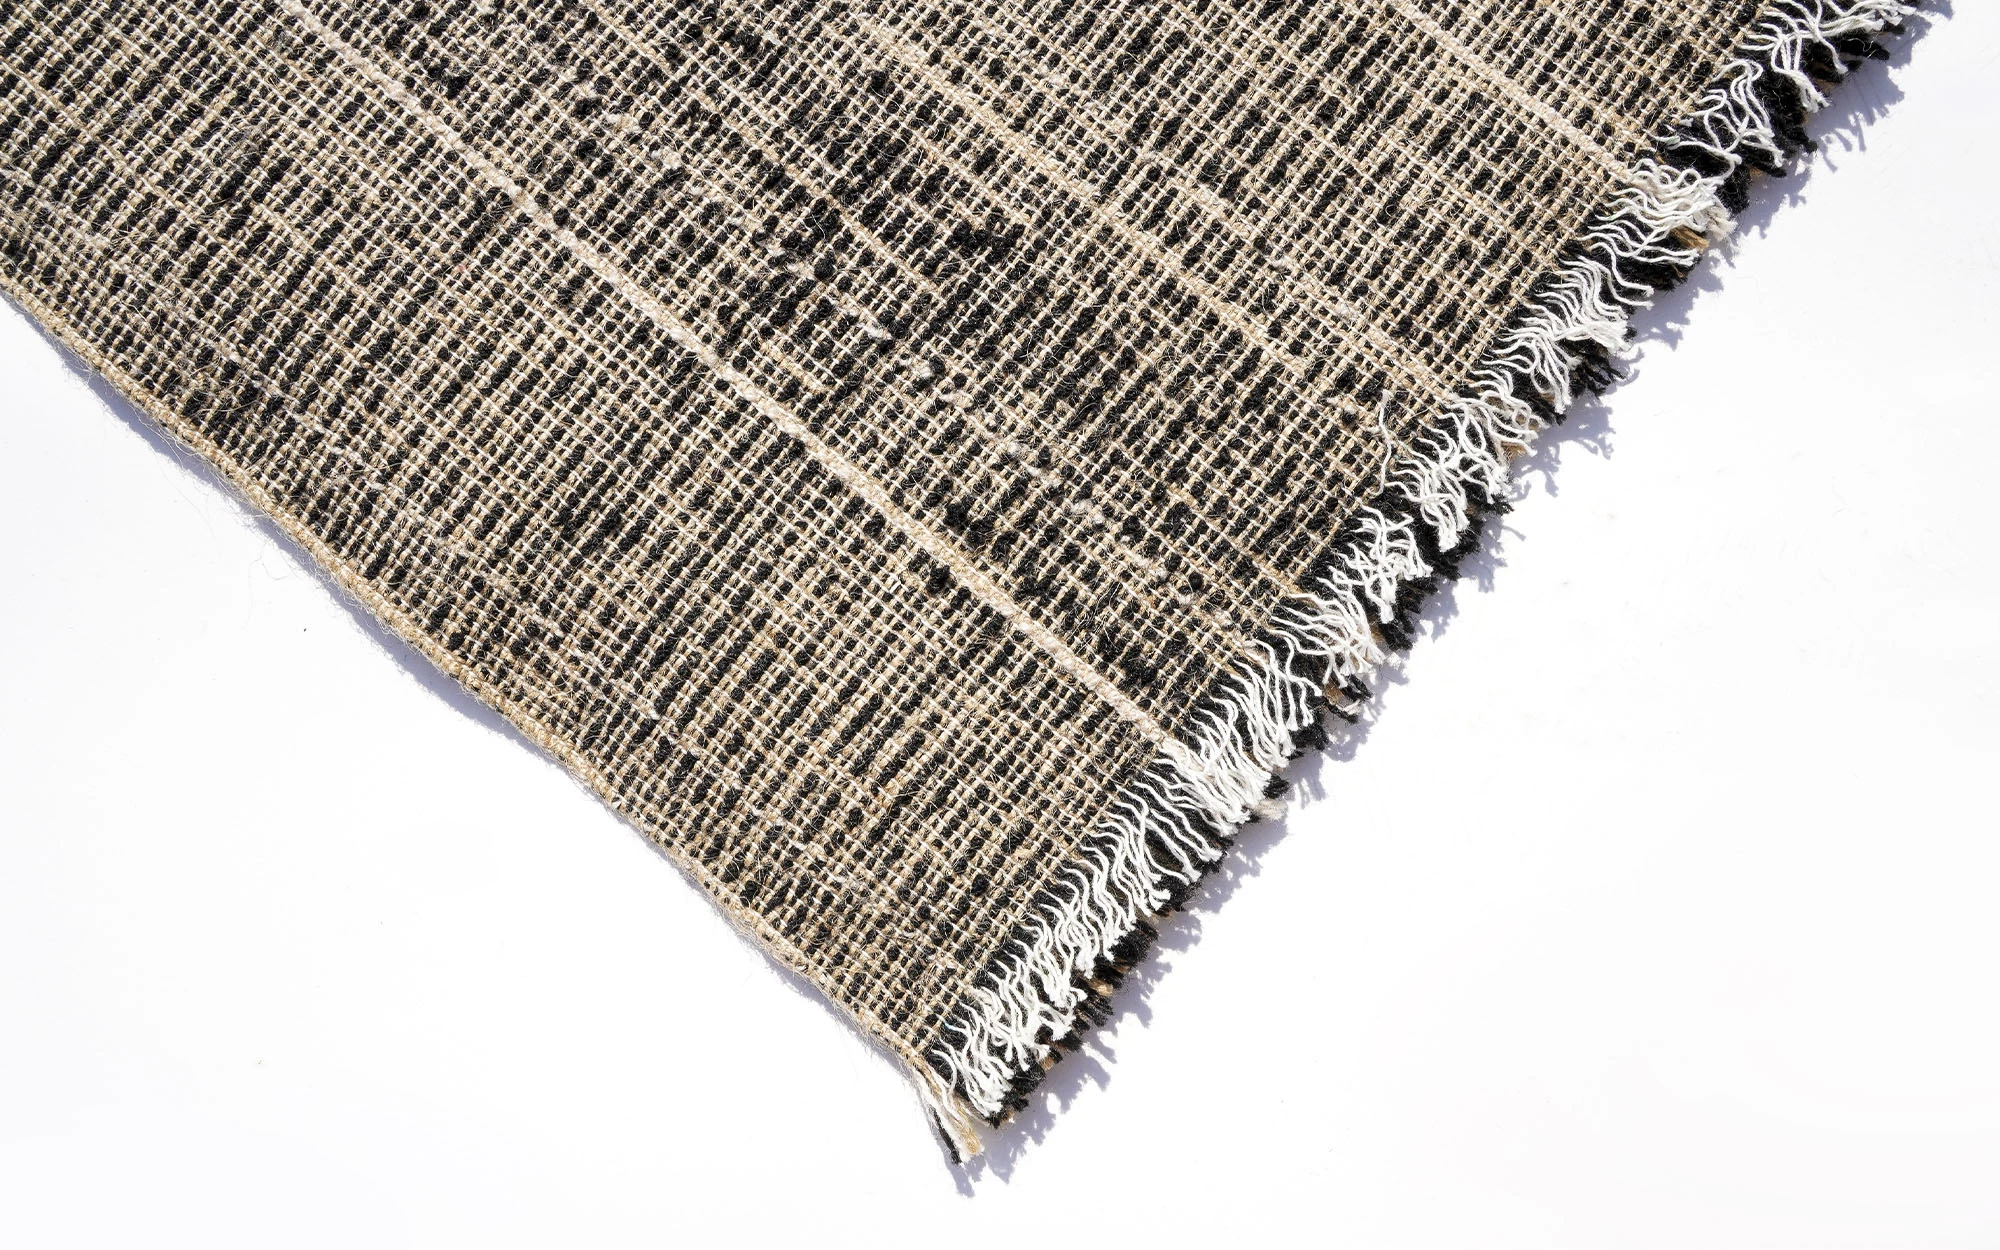 Wilton Carpet S - Ronan & Erwan Bouroullec - Carpet - Galerie kreo